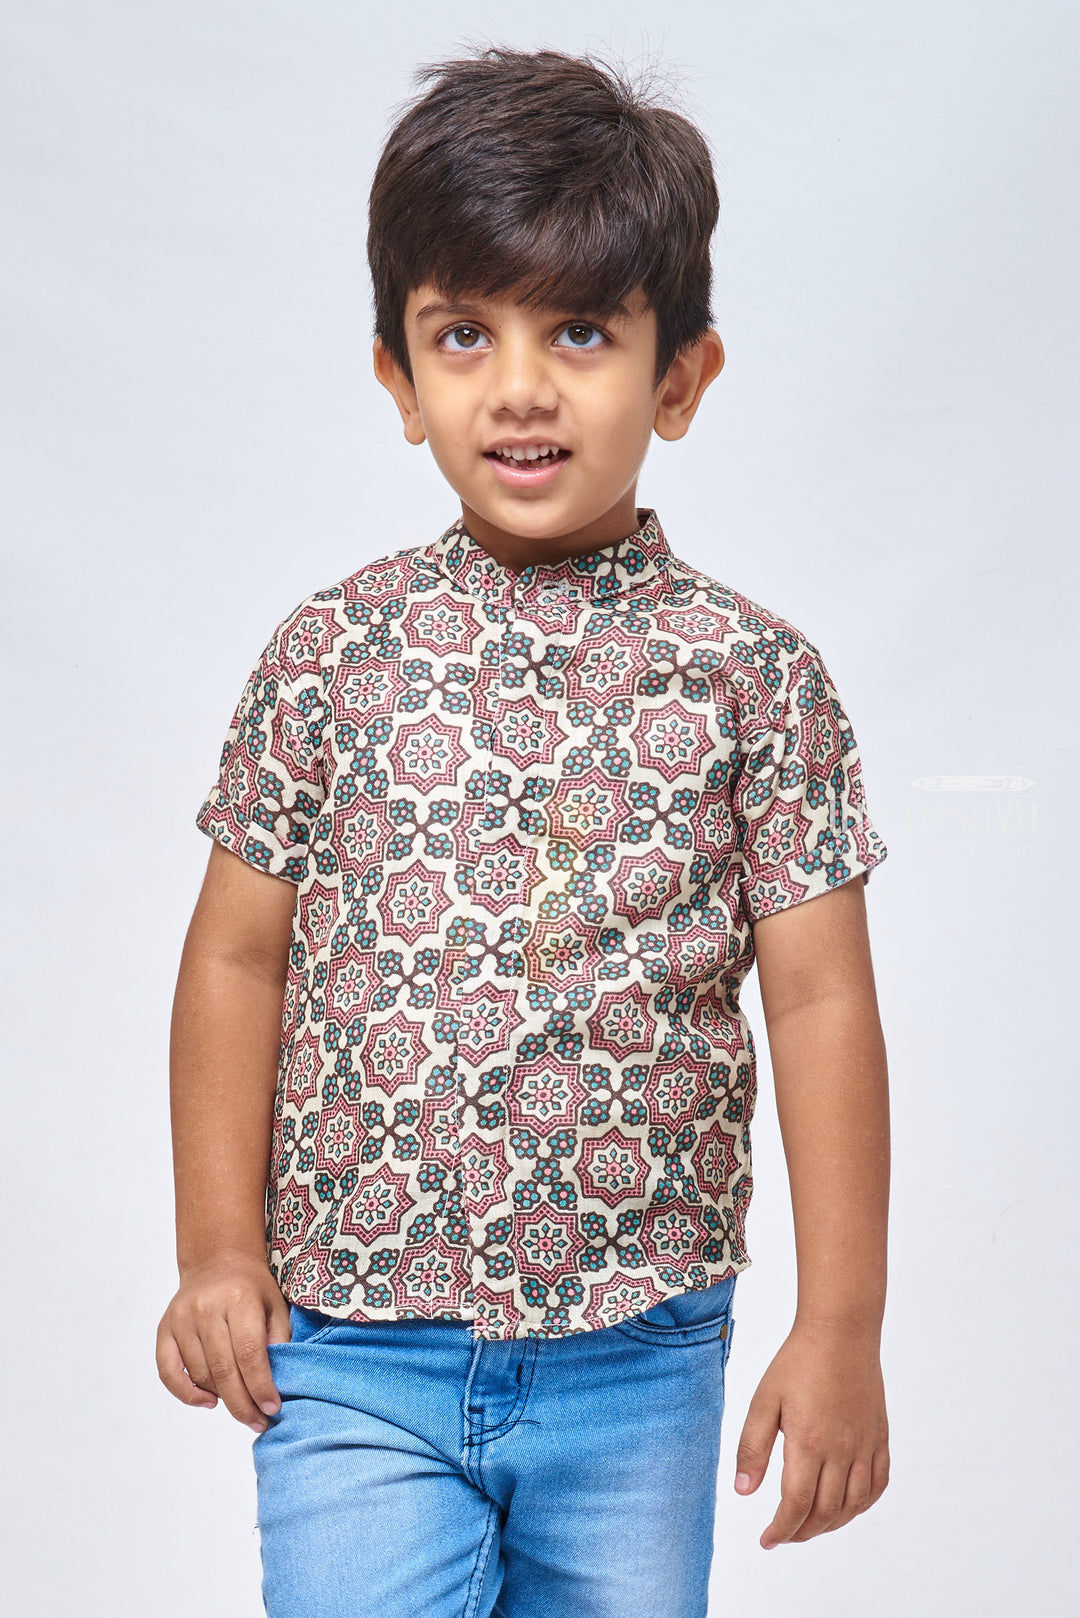 The Nesavu Boys Linen Shirt Boho Chic: Ajrakh Hand Block Print Boys' Shirt for Bohemian Fashion Enthusiasts Nesavu 14 (6M) / multicolor / Linen BS058-14 Ajrakh Hand Block Prined Shirt | Boy Baby shirts | The Nesavu